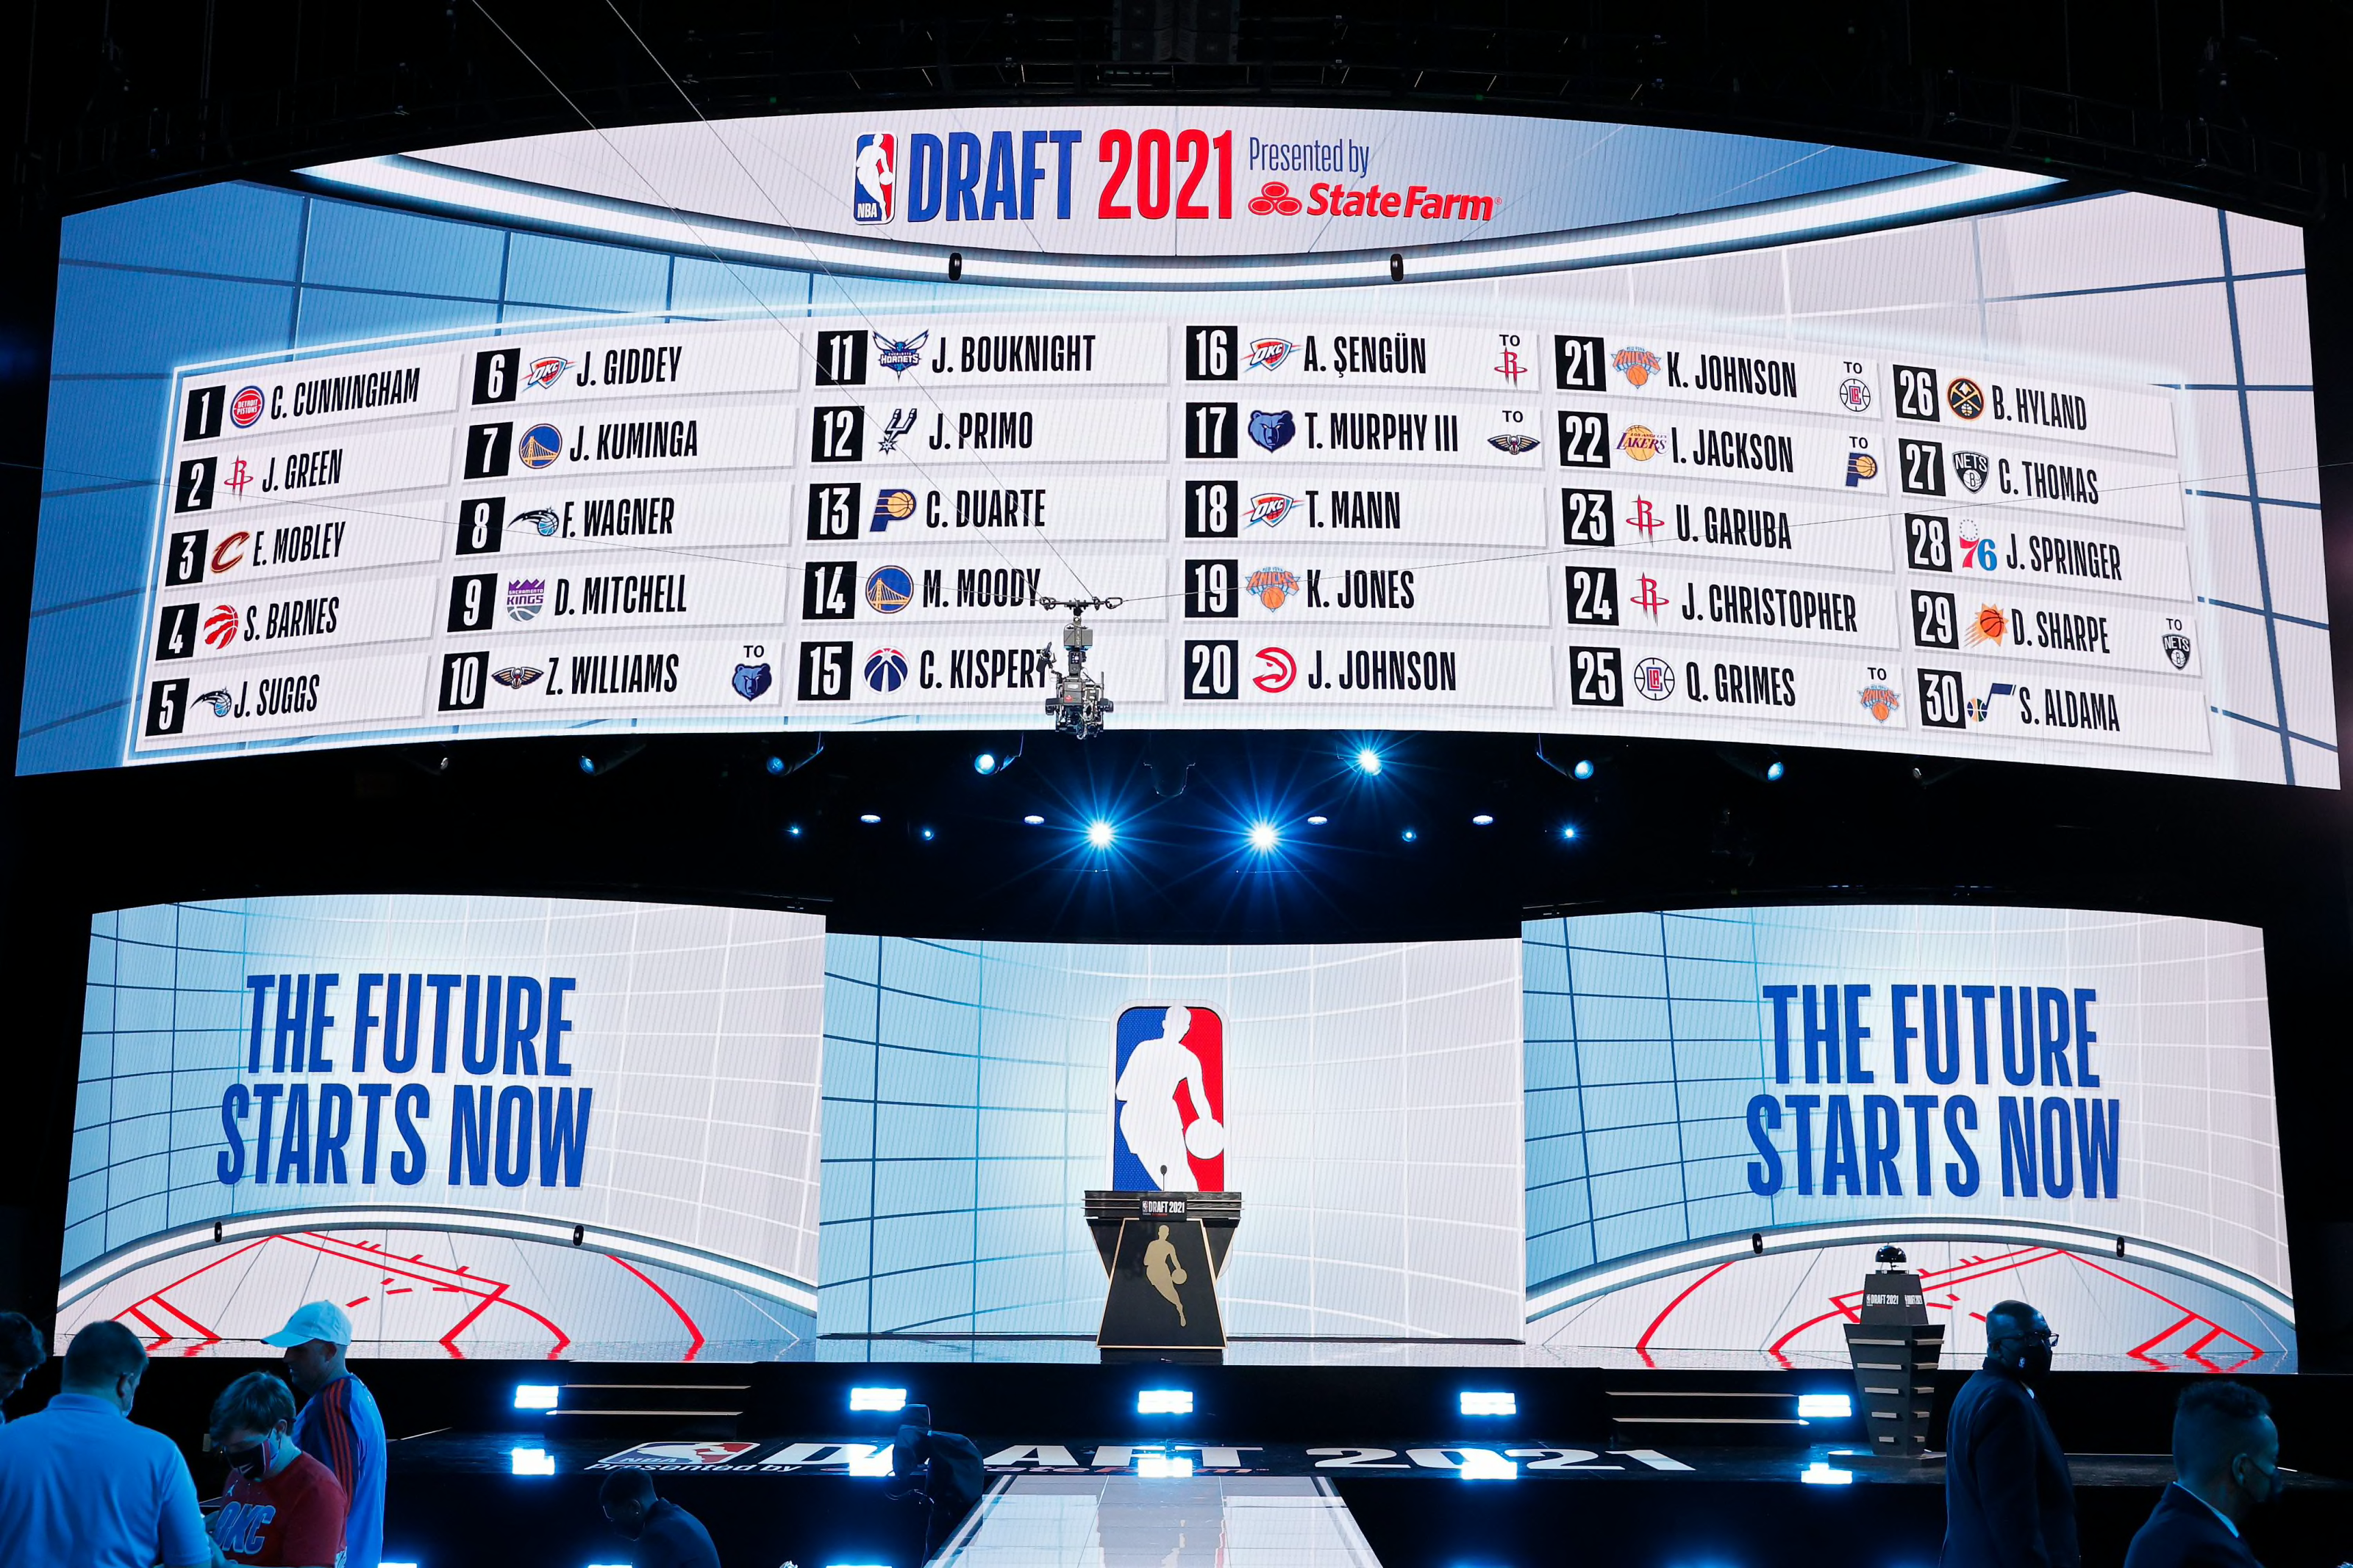 best draft prospects 2022